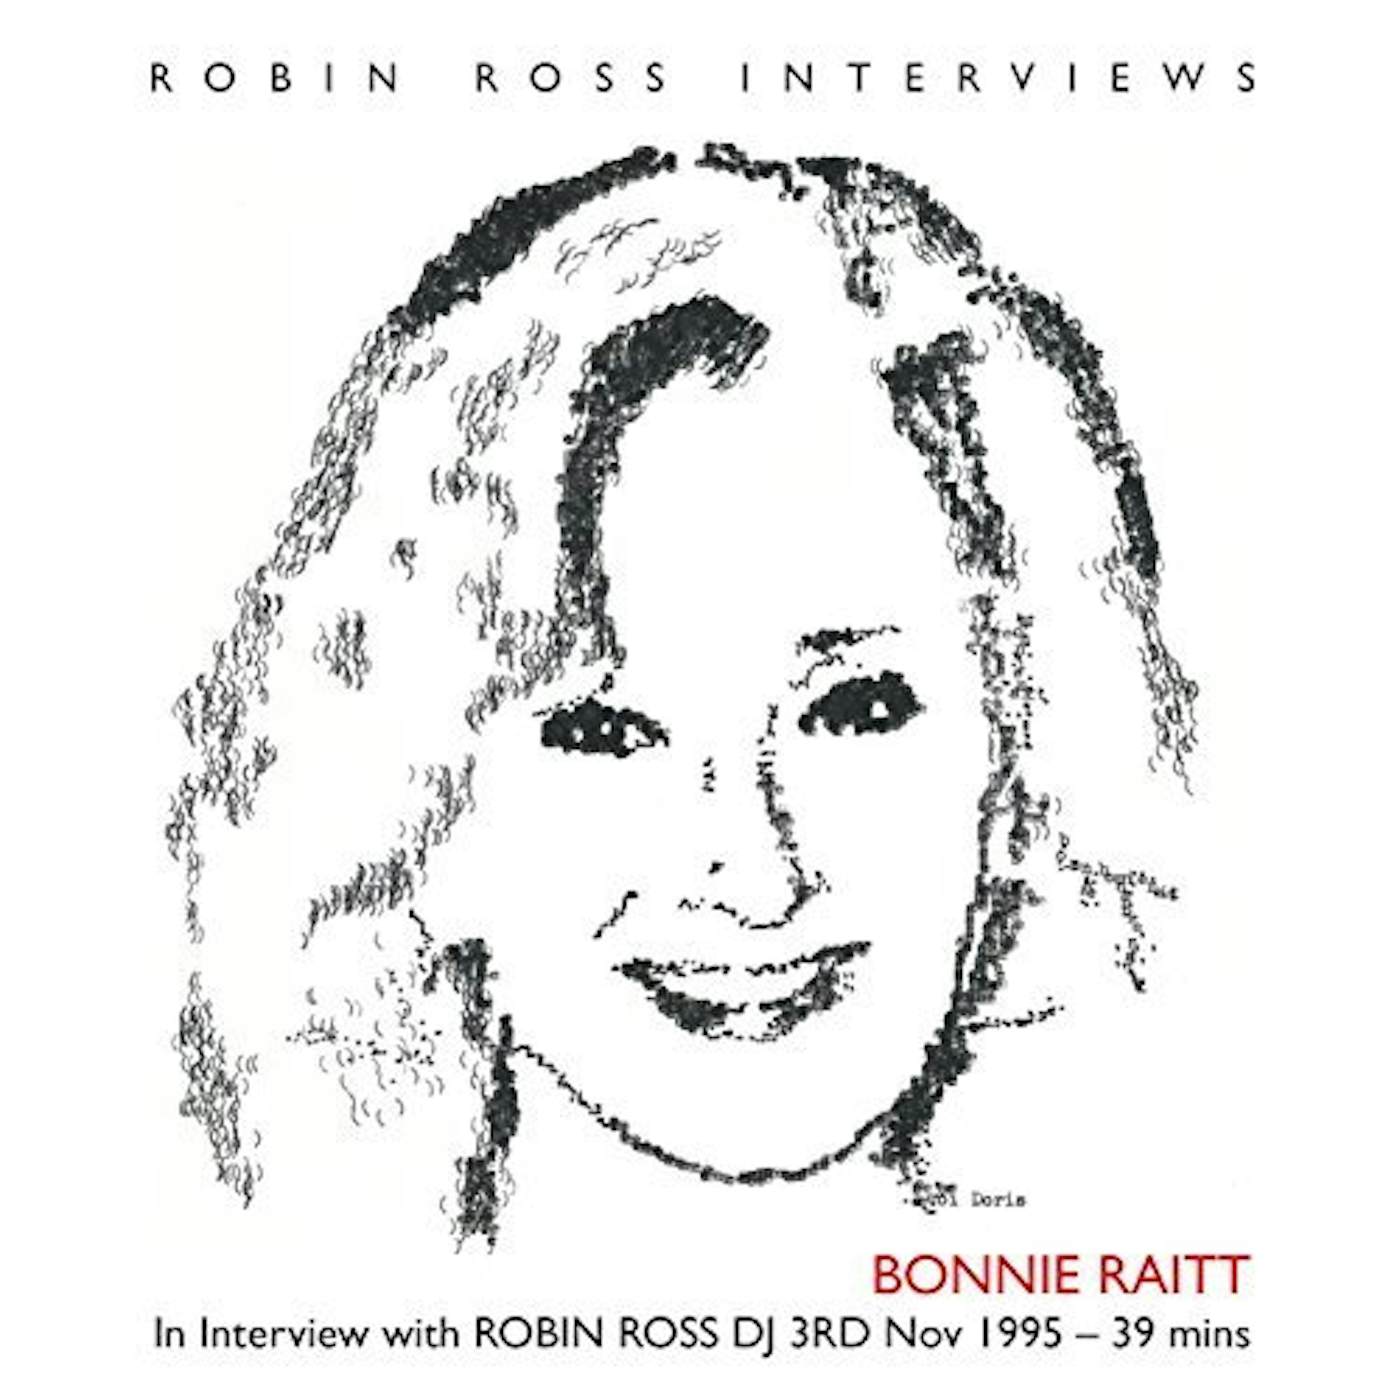 Bonnie Raitt IN INTERVIEW WITH ROBIN ROSS DJ CD